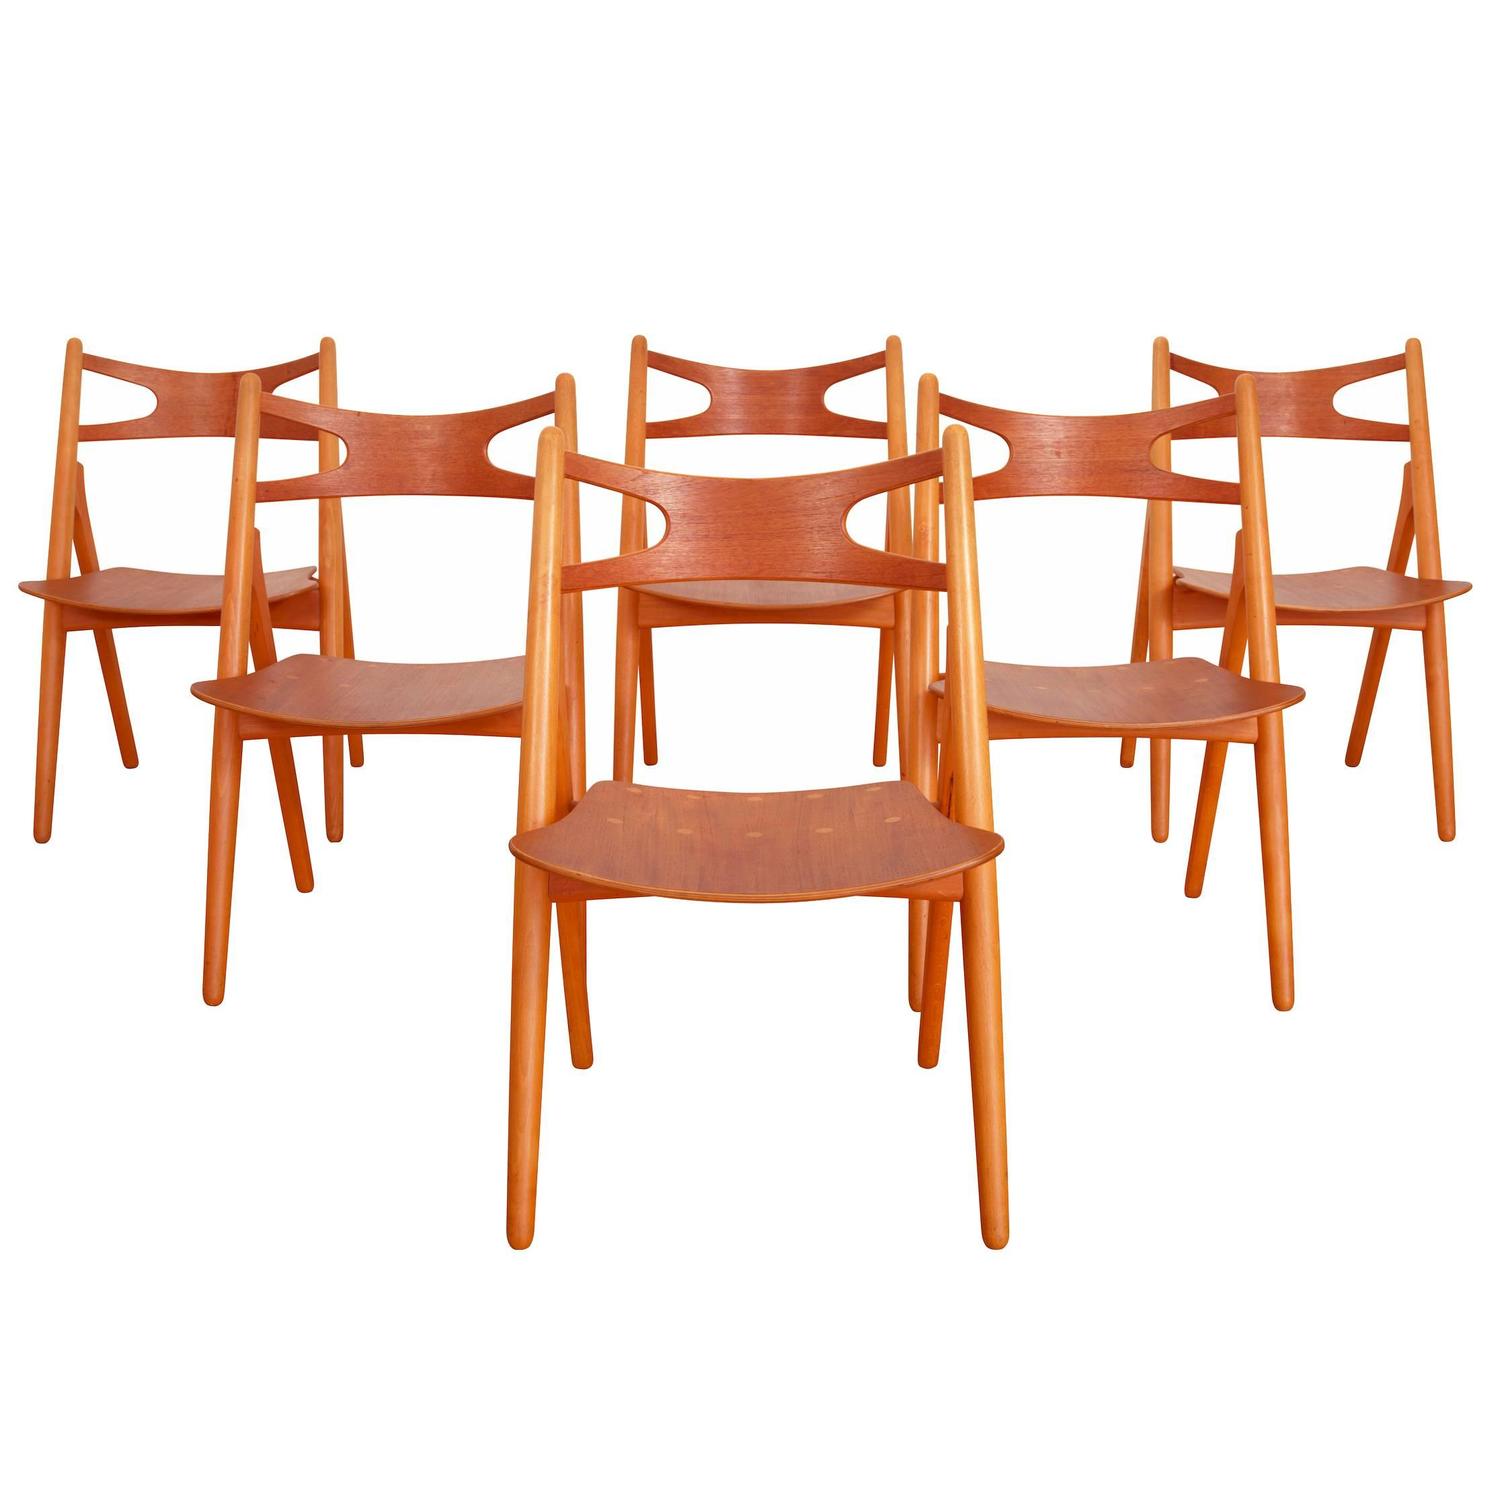 Hans J. Wegner Sawbuck Chairs For Sale at 1stdibs